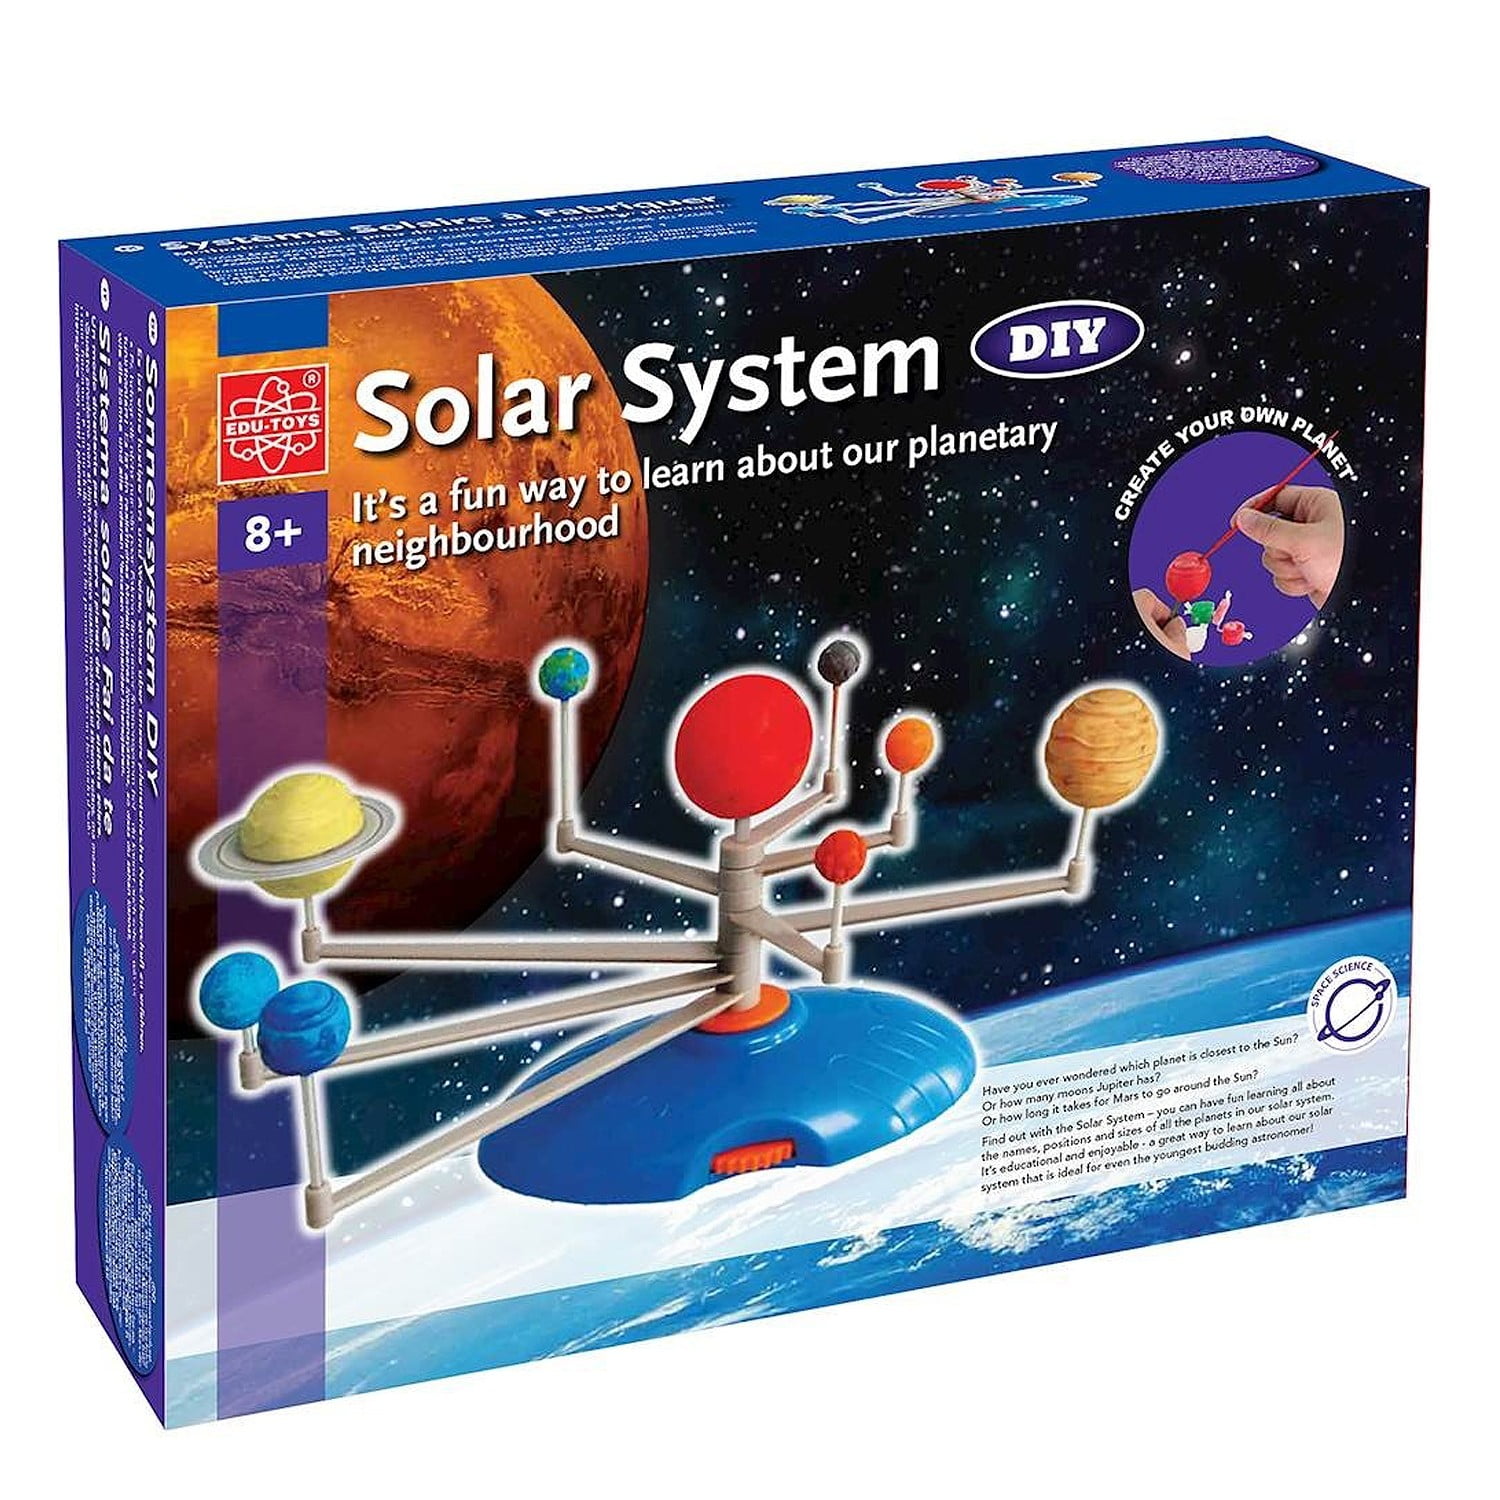 SOLAR SYSTEM BUILD PAINT PLANETARIUM SCIENCE ASTRONOMY KID BIRTHDAY PRESENT GIFT 